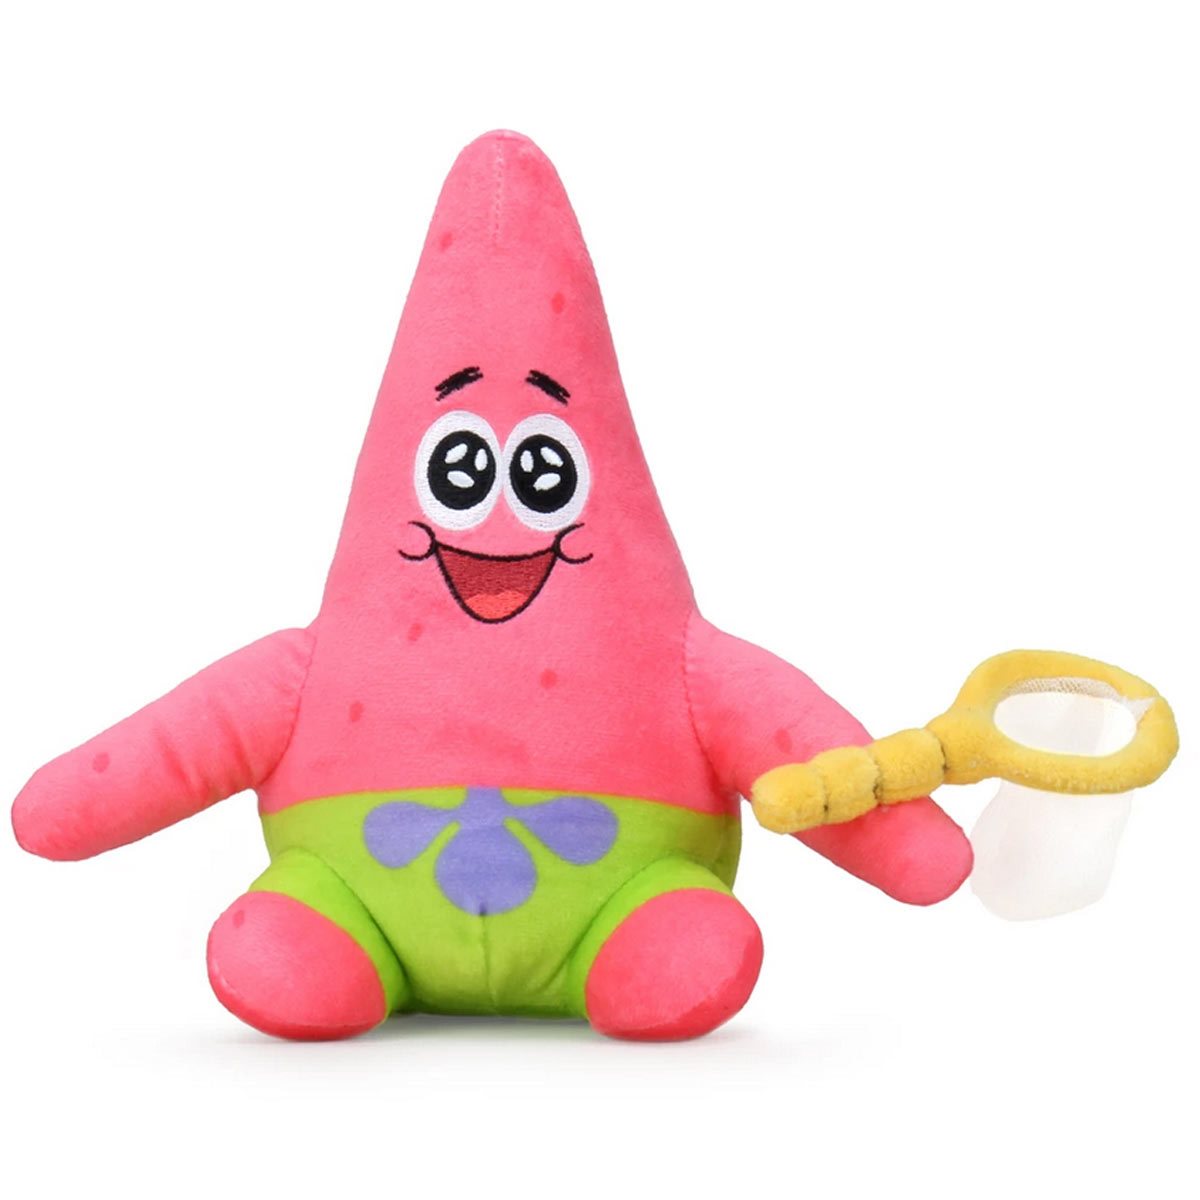 Spongebob Squarepants 2 Patrick Star Plush Doll 8" New 